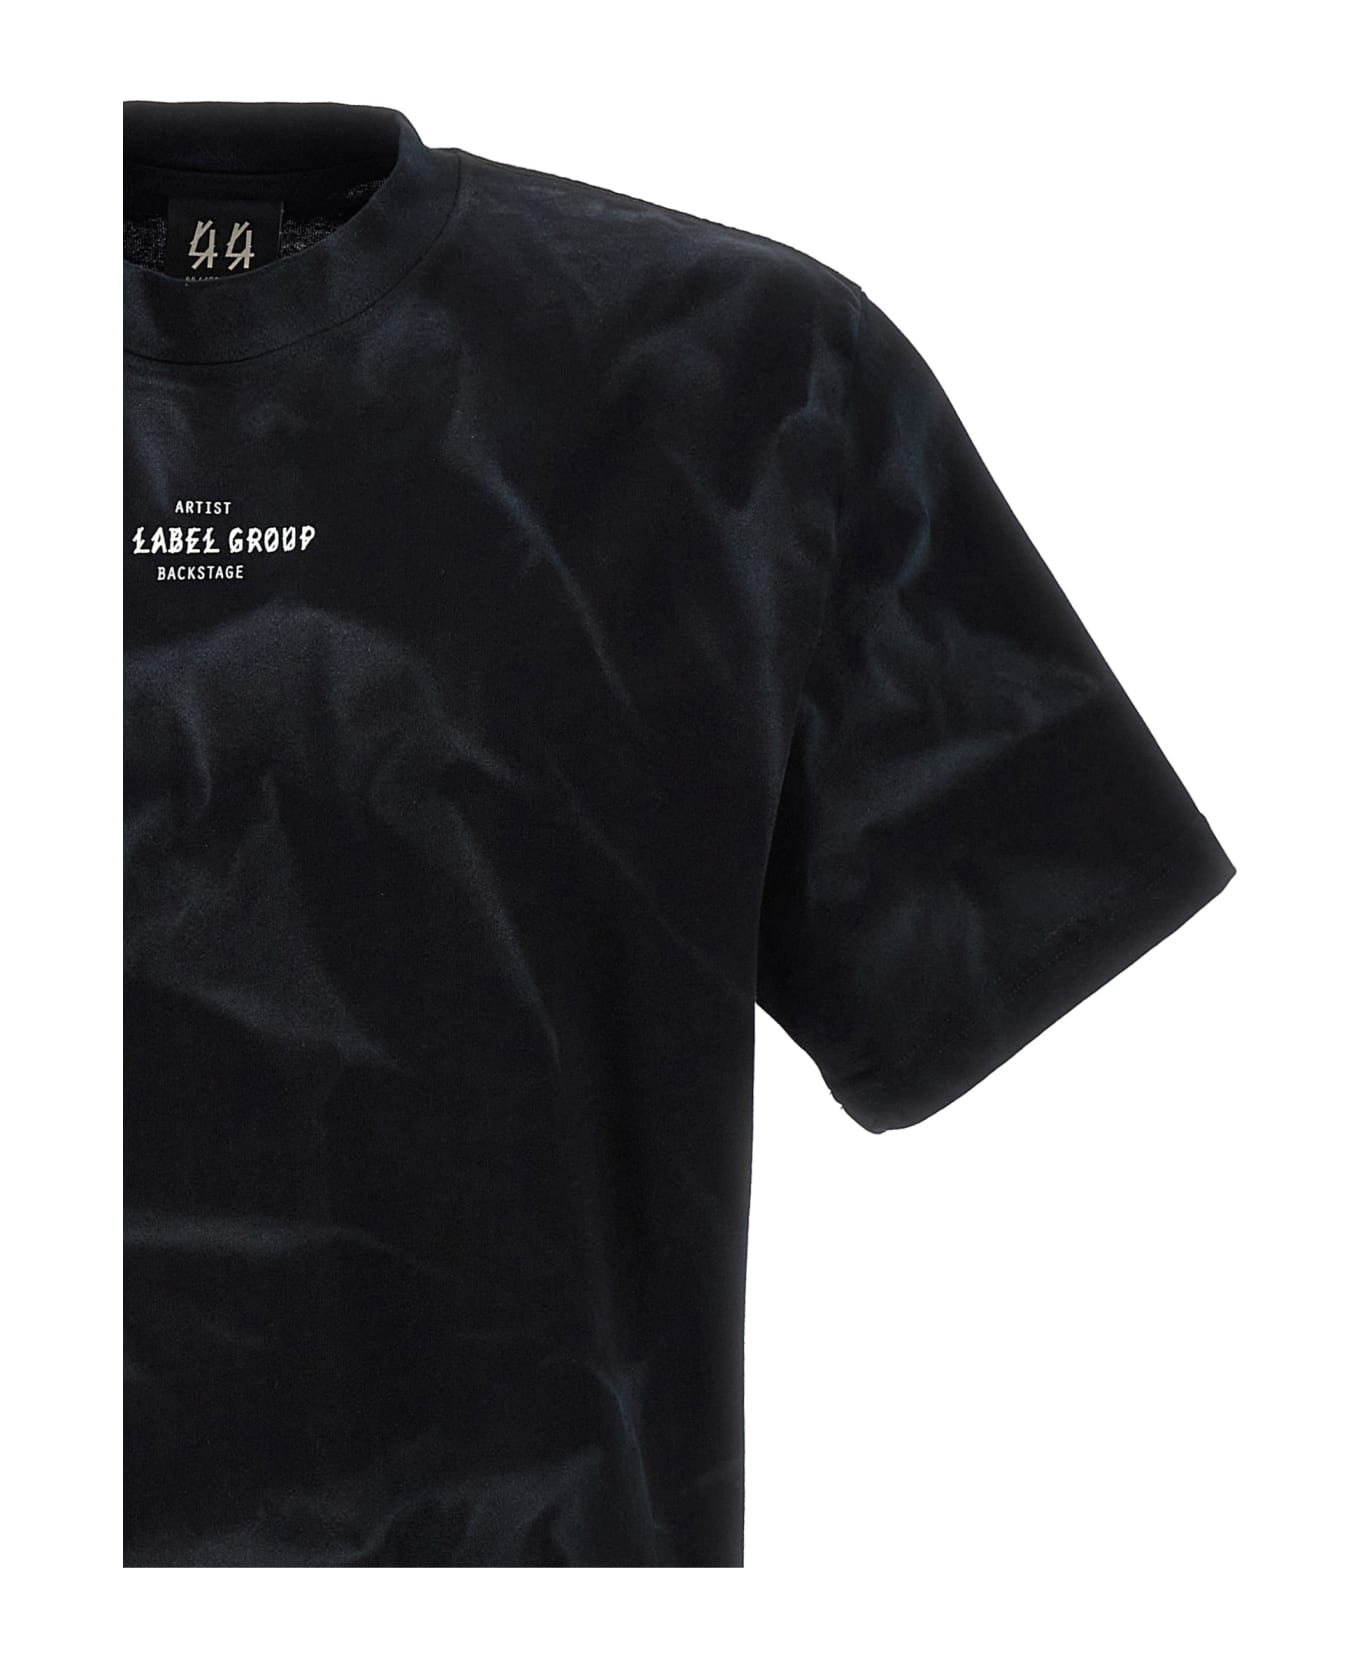 44 Label Group '44 Smoke' T-shirt - White/Black